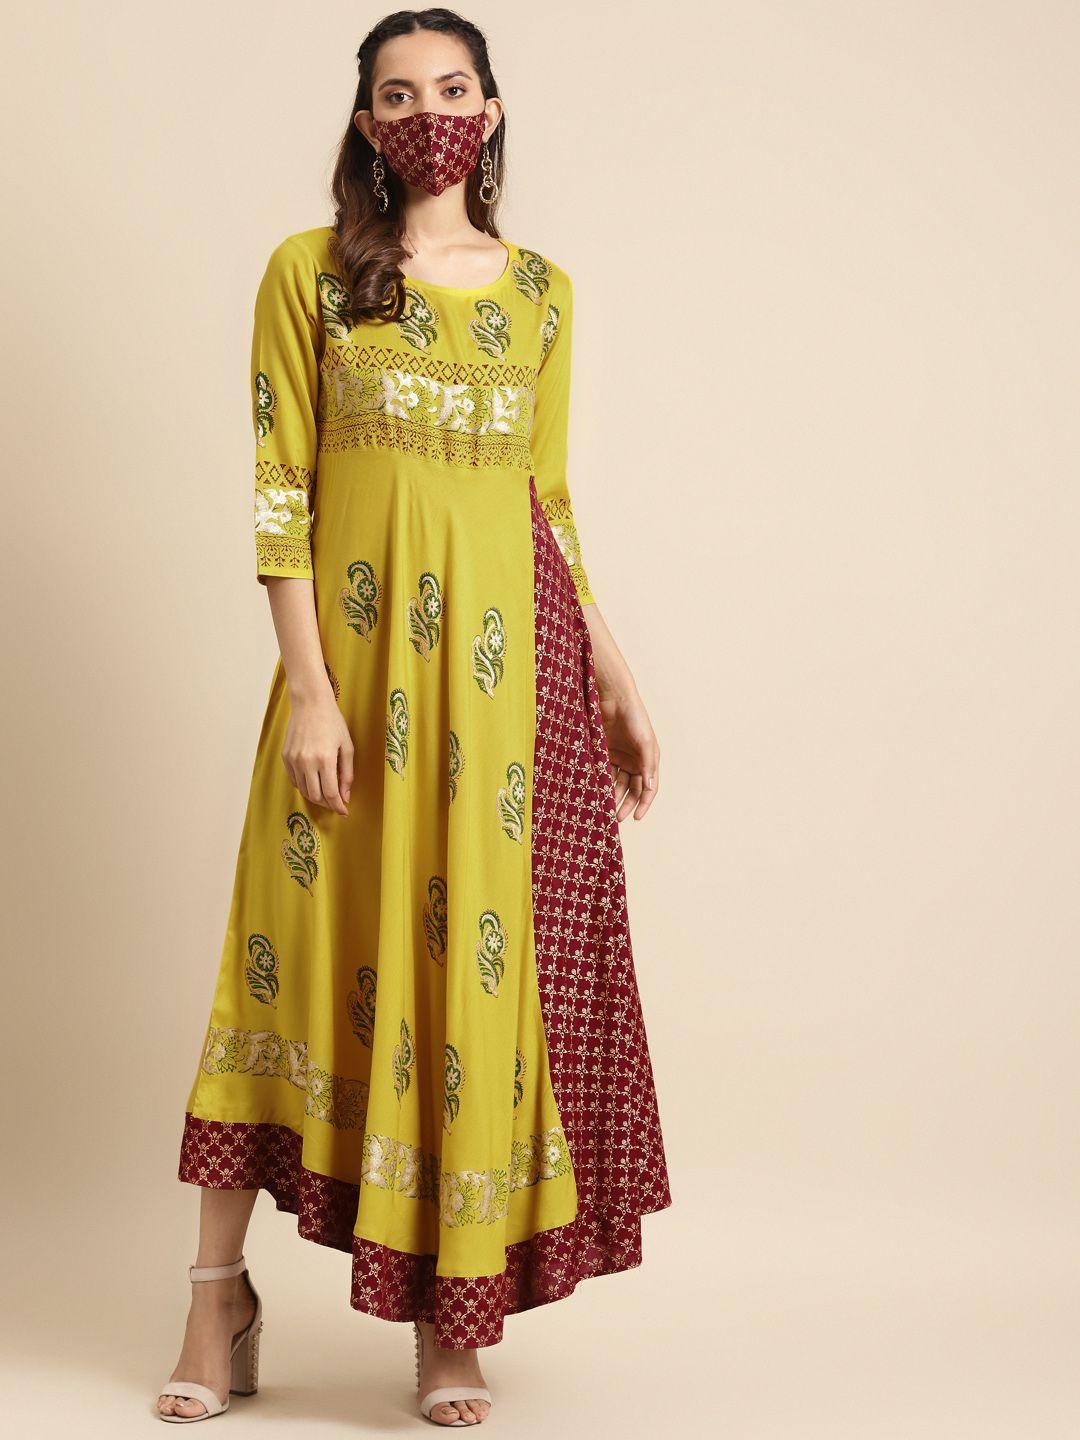 rangmayee women mustard yellow & maroon  printed maxi dress